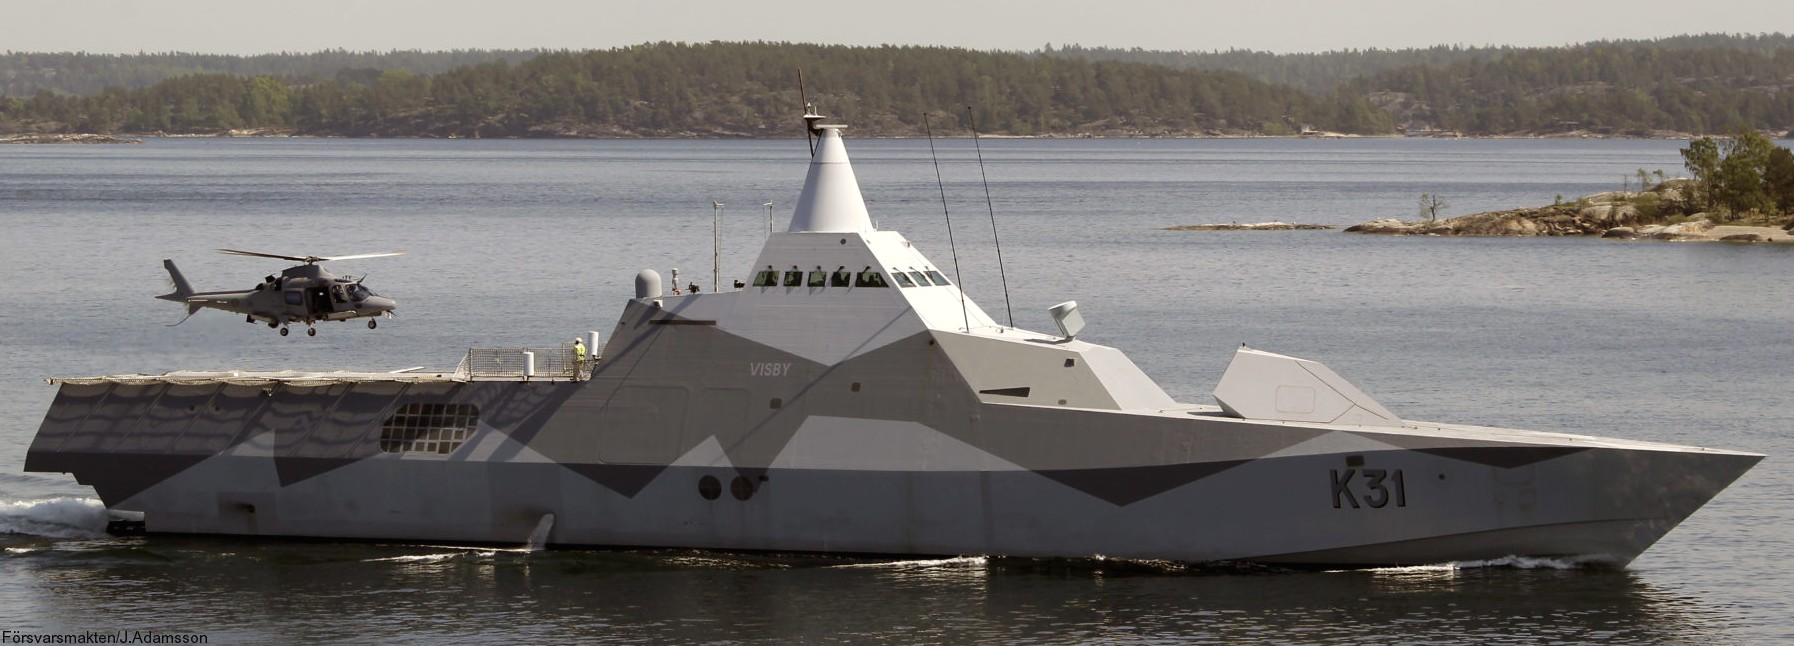 k31 hswms hms visby class corvette royal swedish navy svenska marinen aw109 helicopter 15